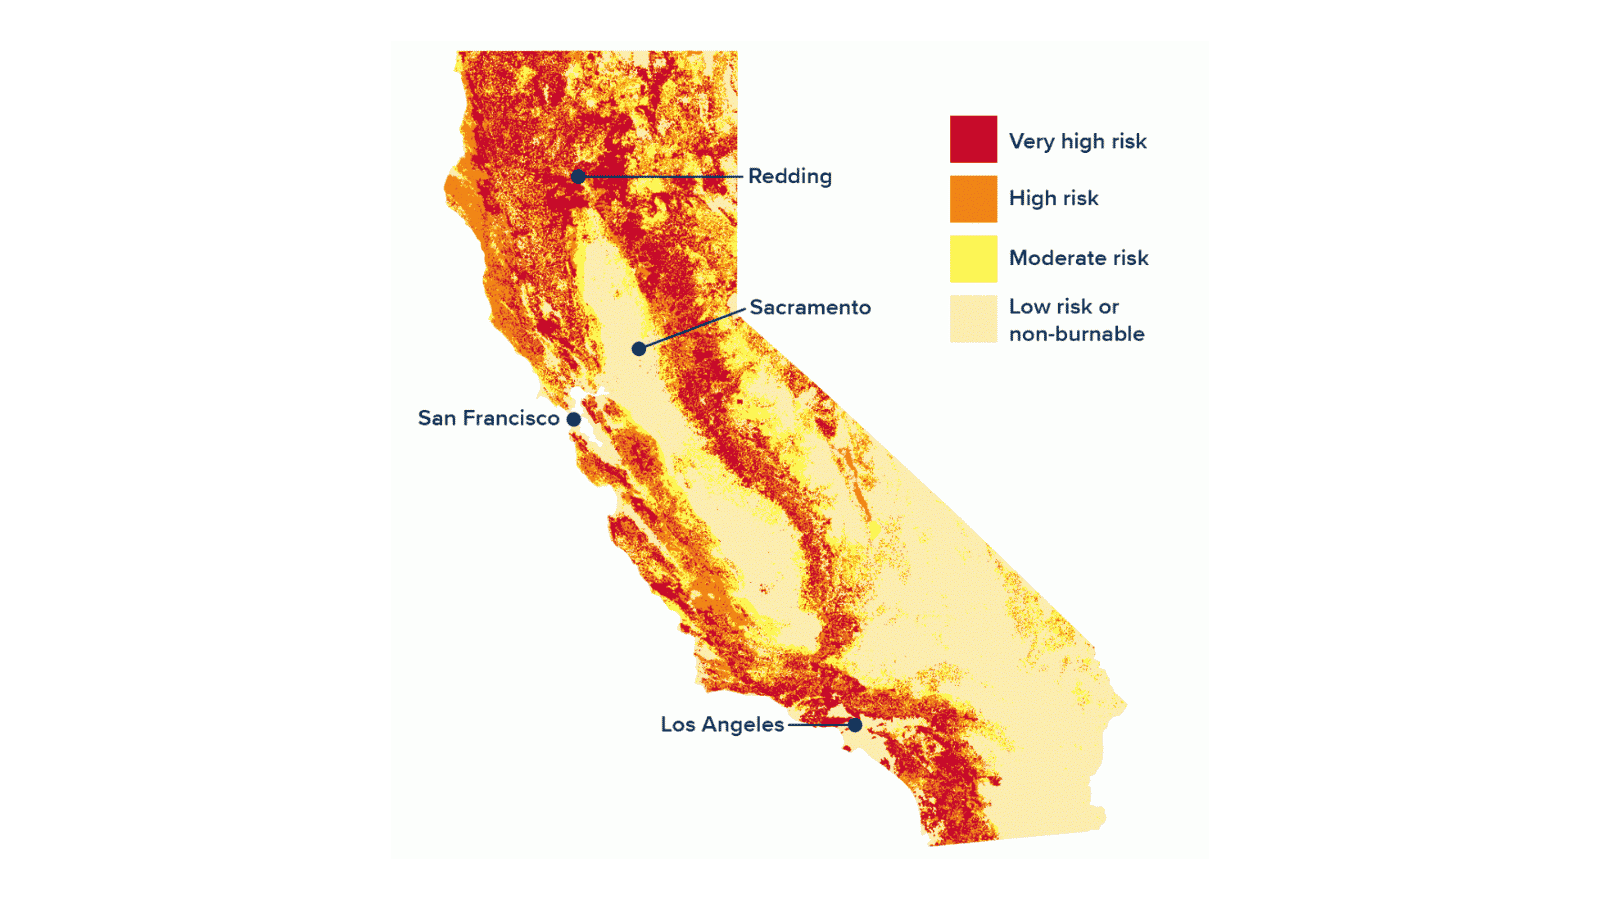 Fire risk in California